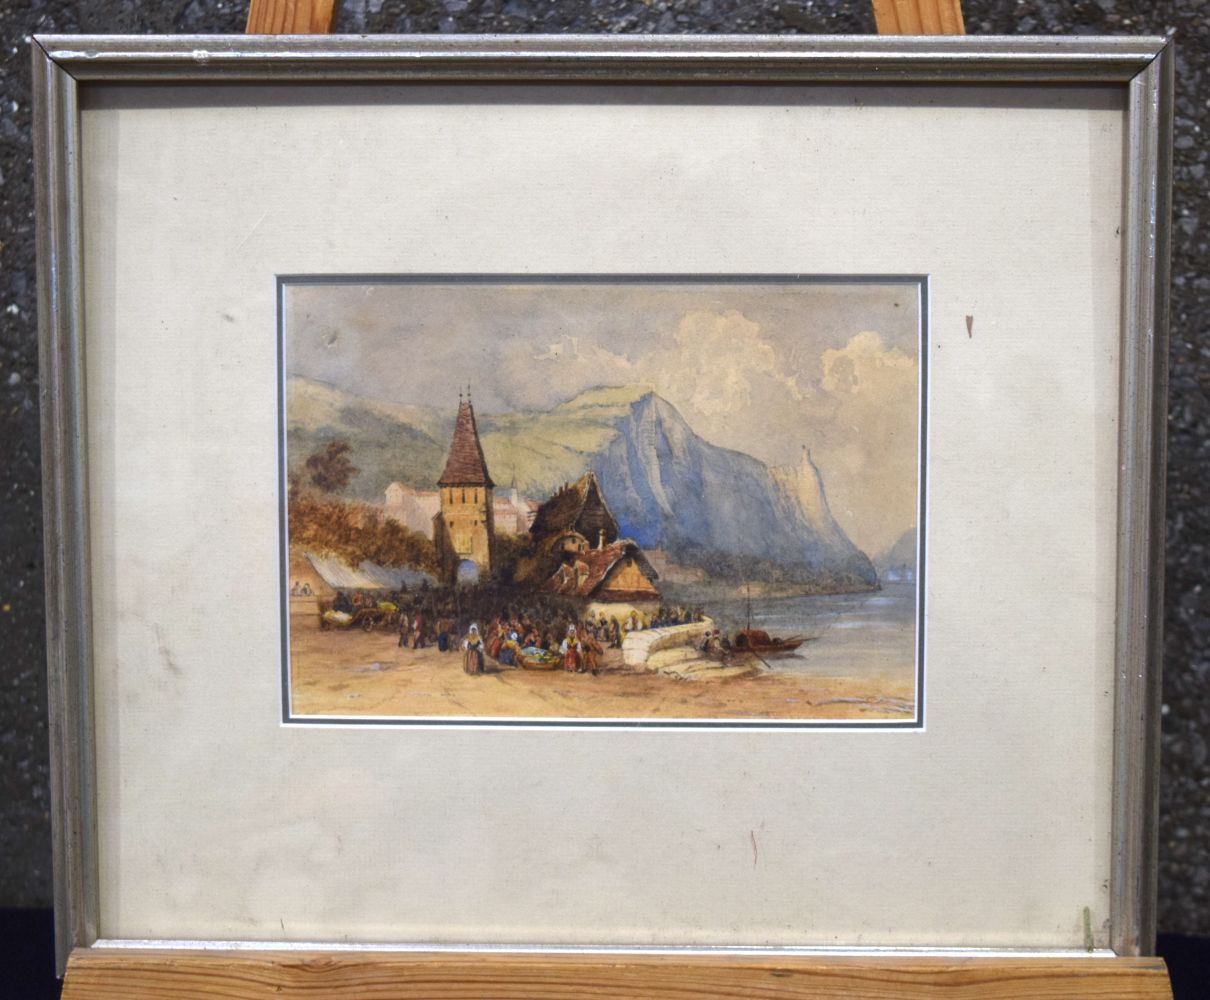 Continental School (19th Century) Watercolour, Peasants by the coast. Image 17 cm x 24 cm.